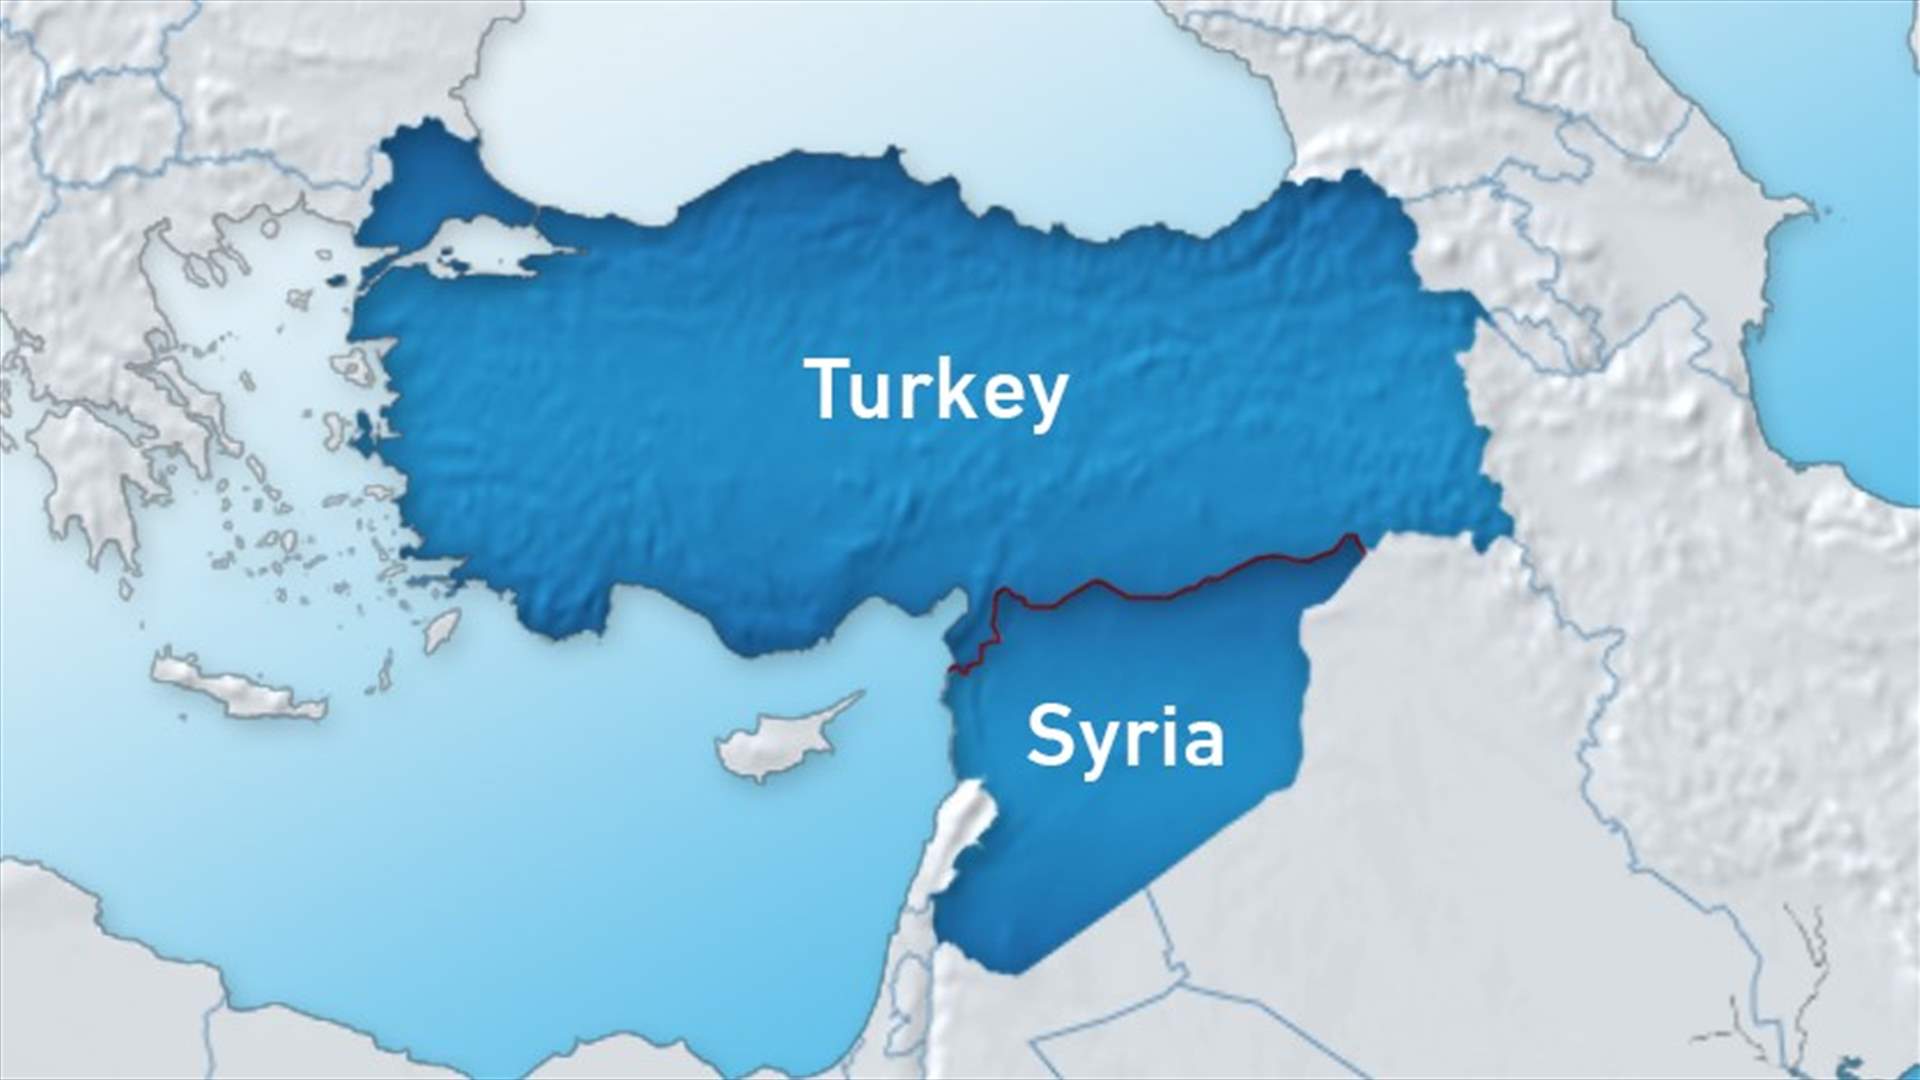 Islamic State advances against Syrian rebels near Turkish border - monitor